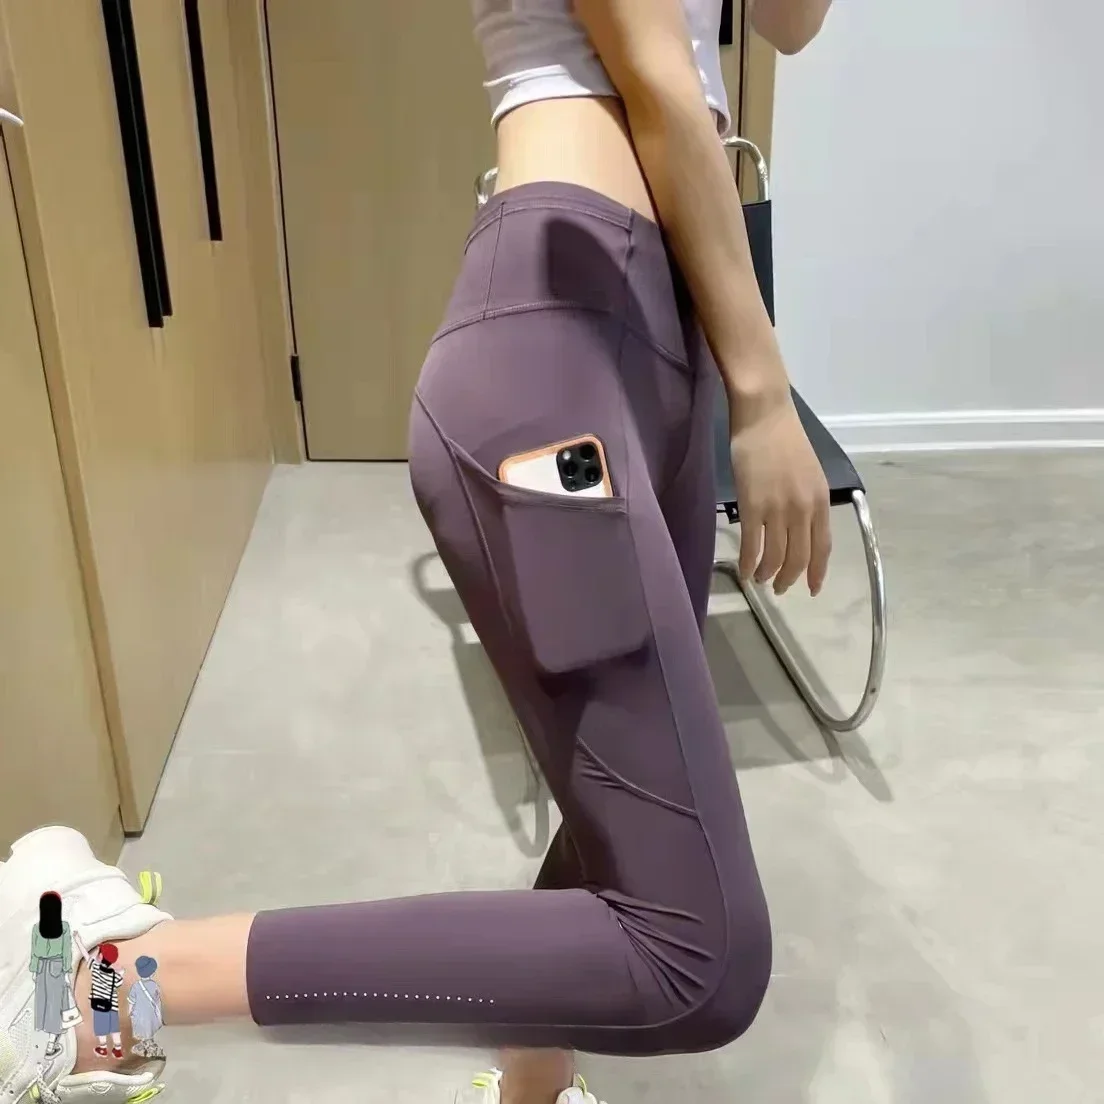 Citroen Vrouwen Snel Gratis Yoga Broek Hoge Taille Elasticiteit Multi-Pocket Workout Sport Leggings Casual Enkelband Gymbroek